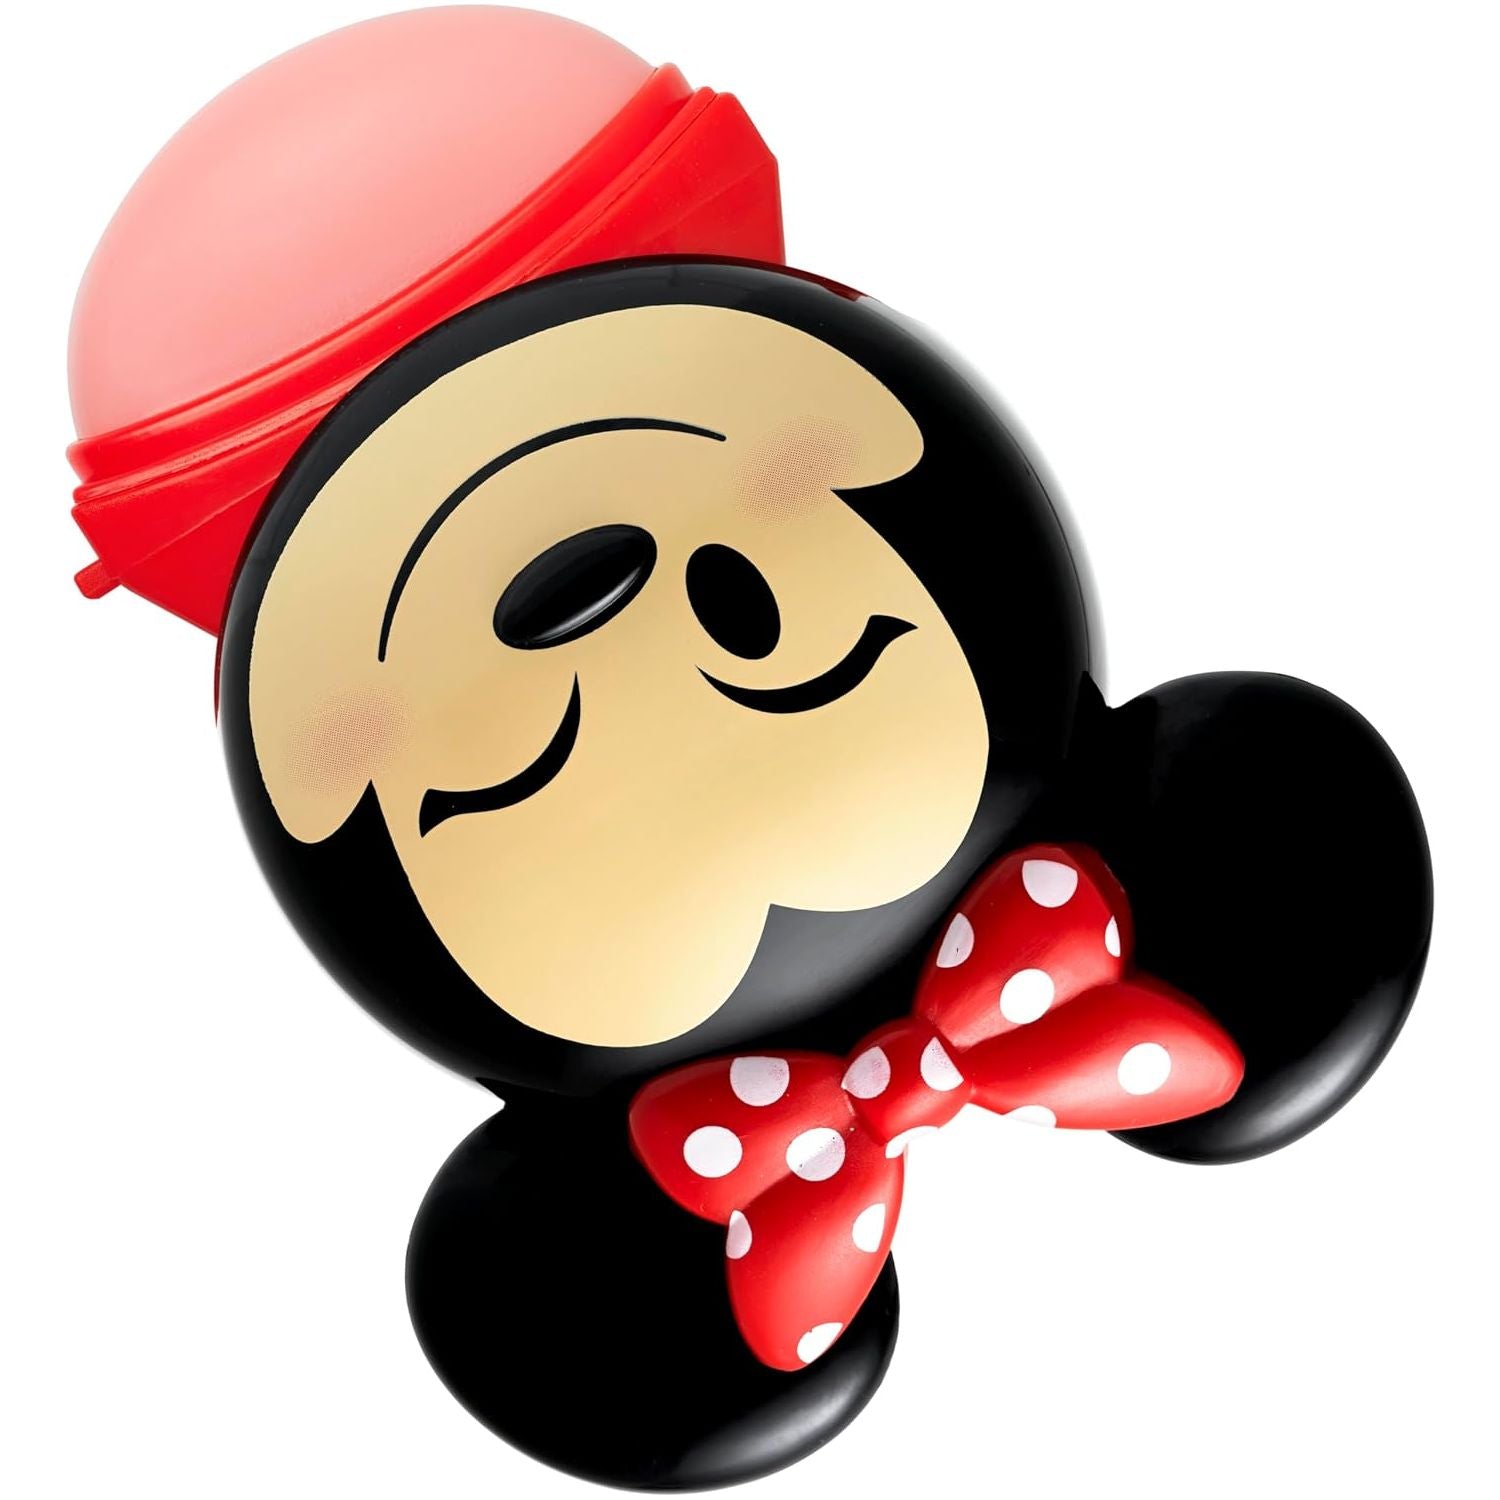 Lip Smacker Disney Minnie Mouse Emoji Lip Balm, Strawberry Lemonade Flavored, Clear.